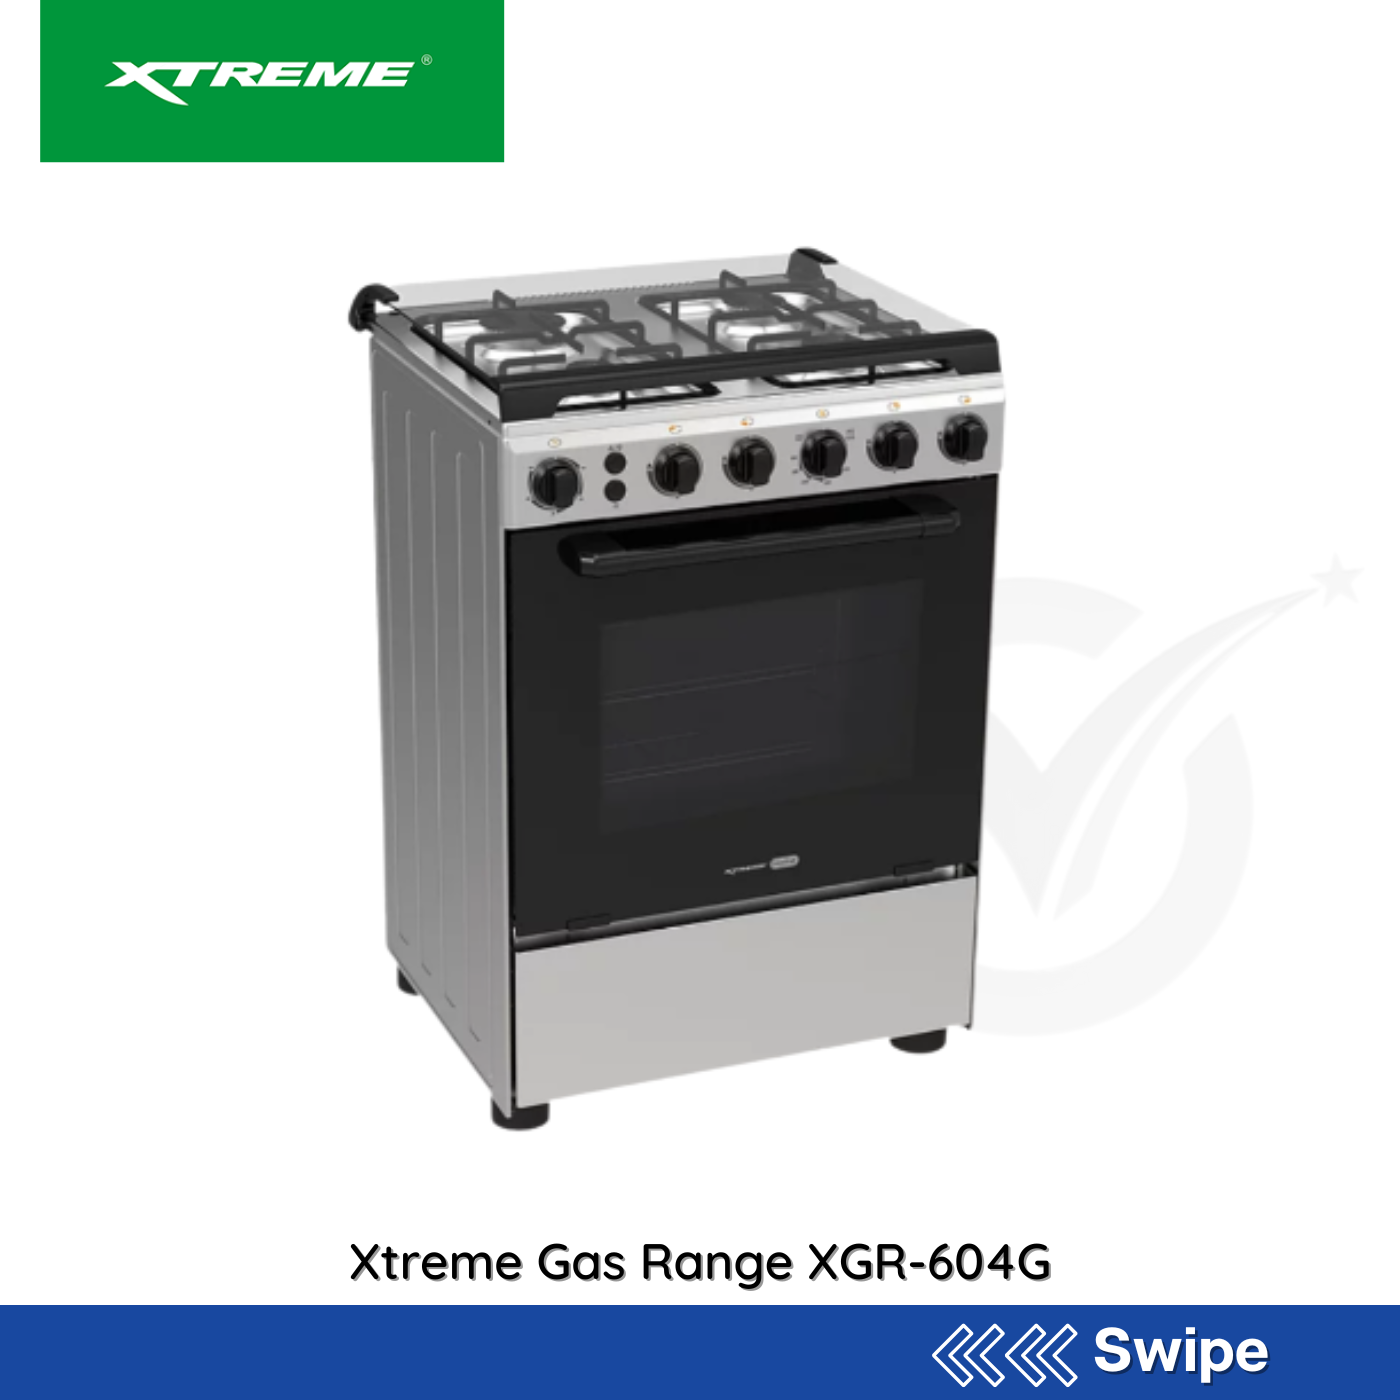 Xtreme Gas Range XGR-604G